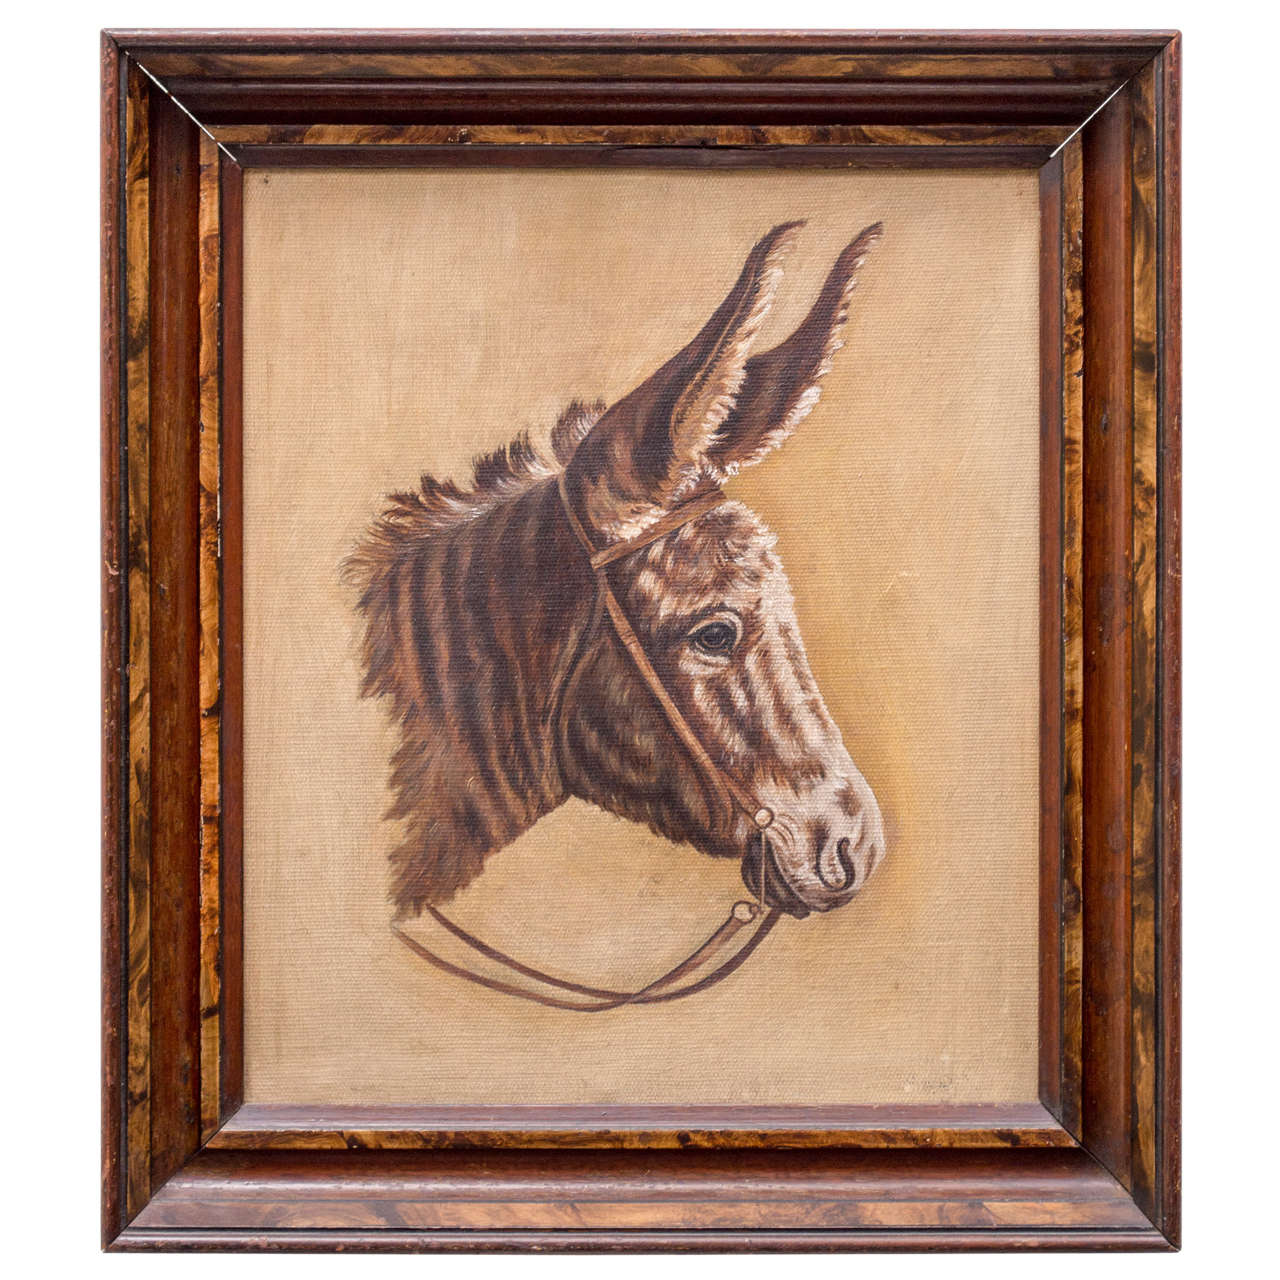 Late 19th Century Donkey Portrait